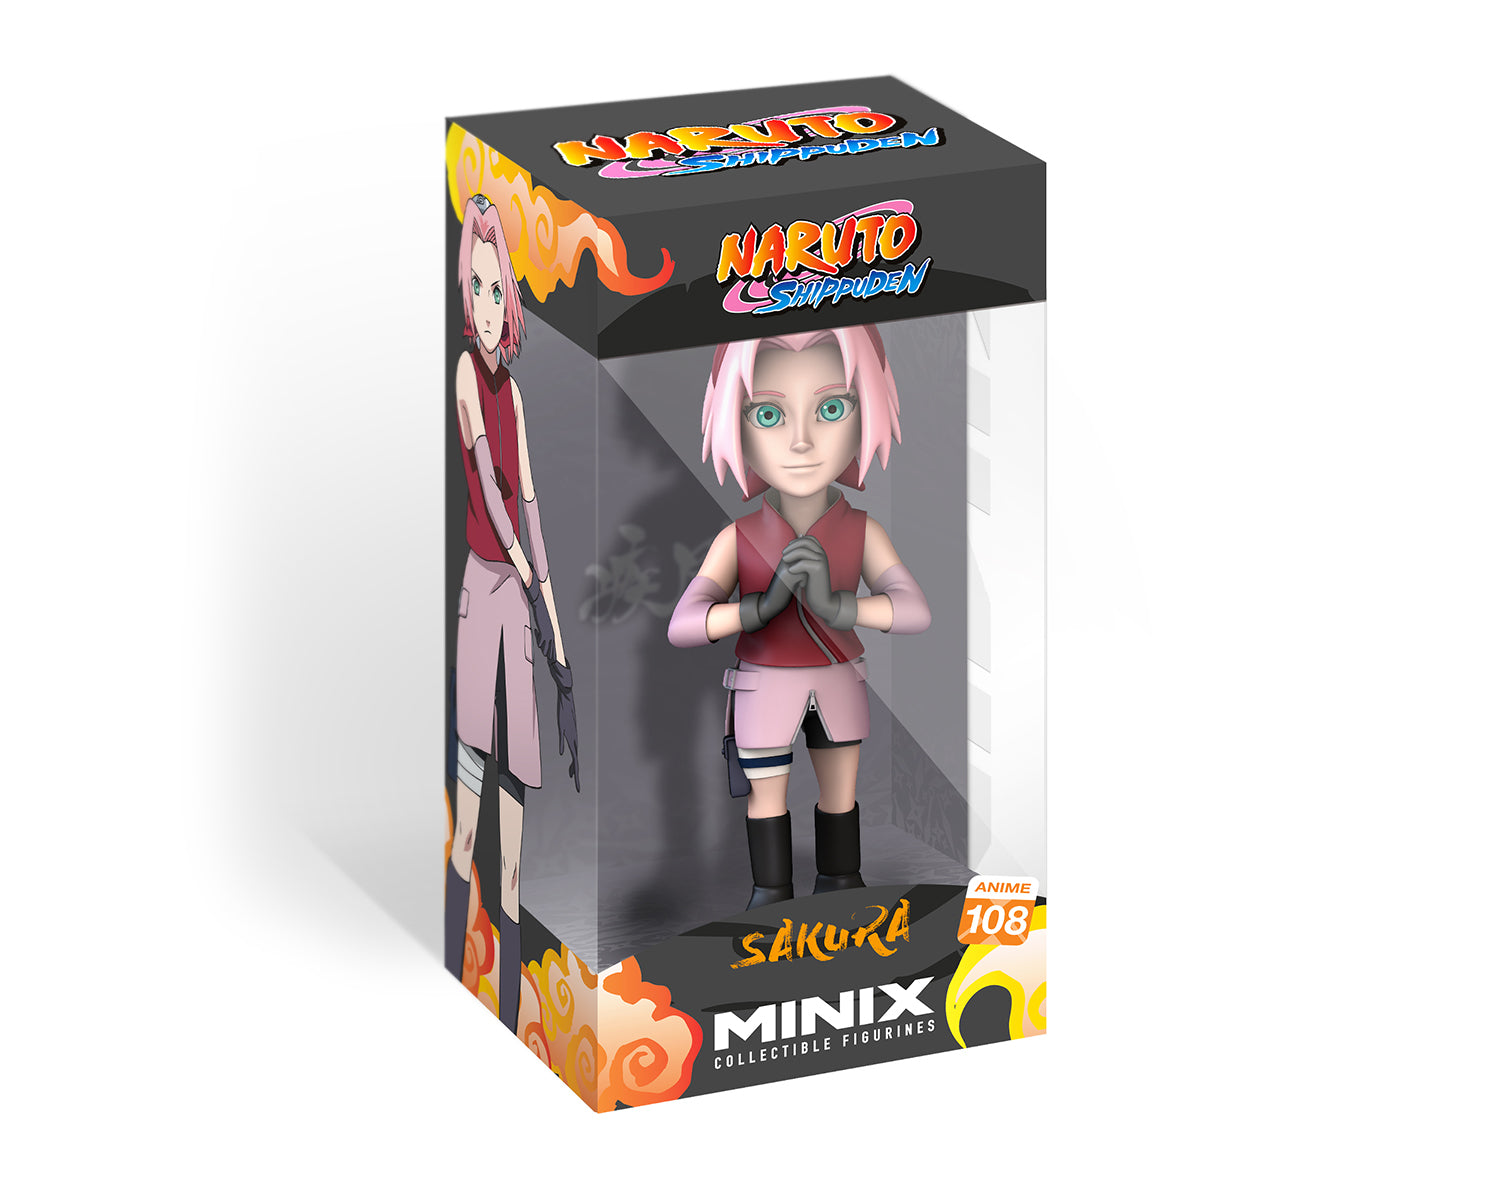 Minix - Anime #108 - Figurine PVC 12 cm - Naruto Shippuden - Sakura